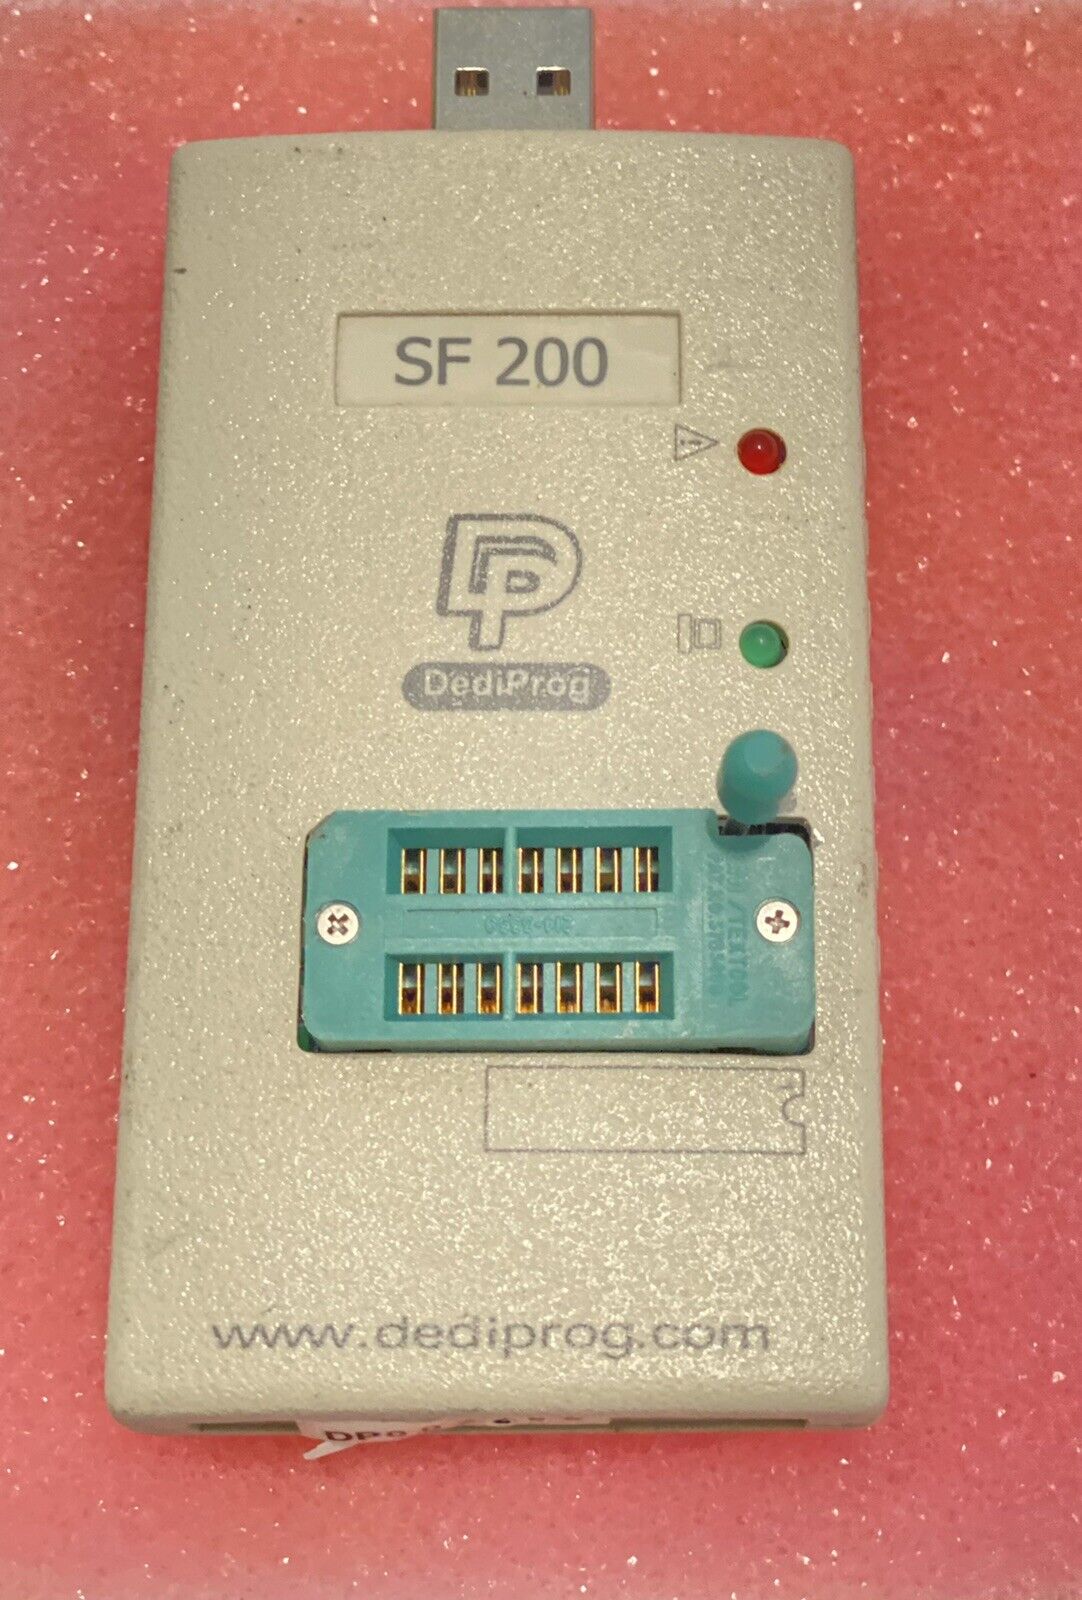 DEDIPROG EEPROM IC Programmer High-Speed ISP EEPROM Programmer ee SF 200